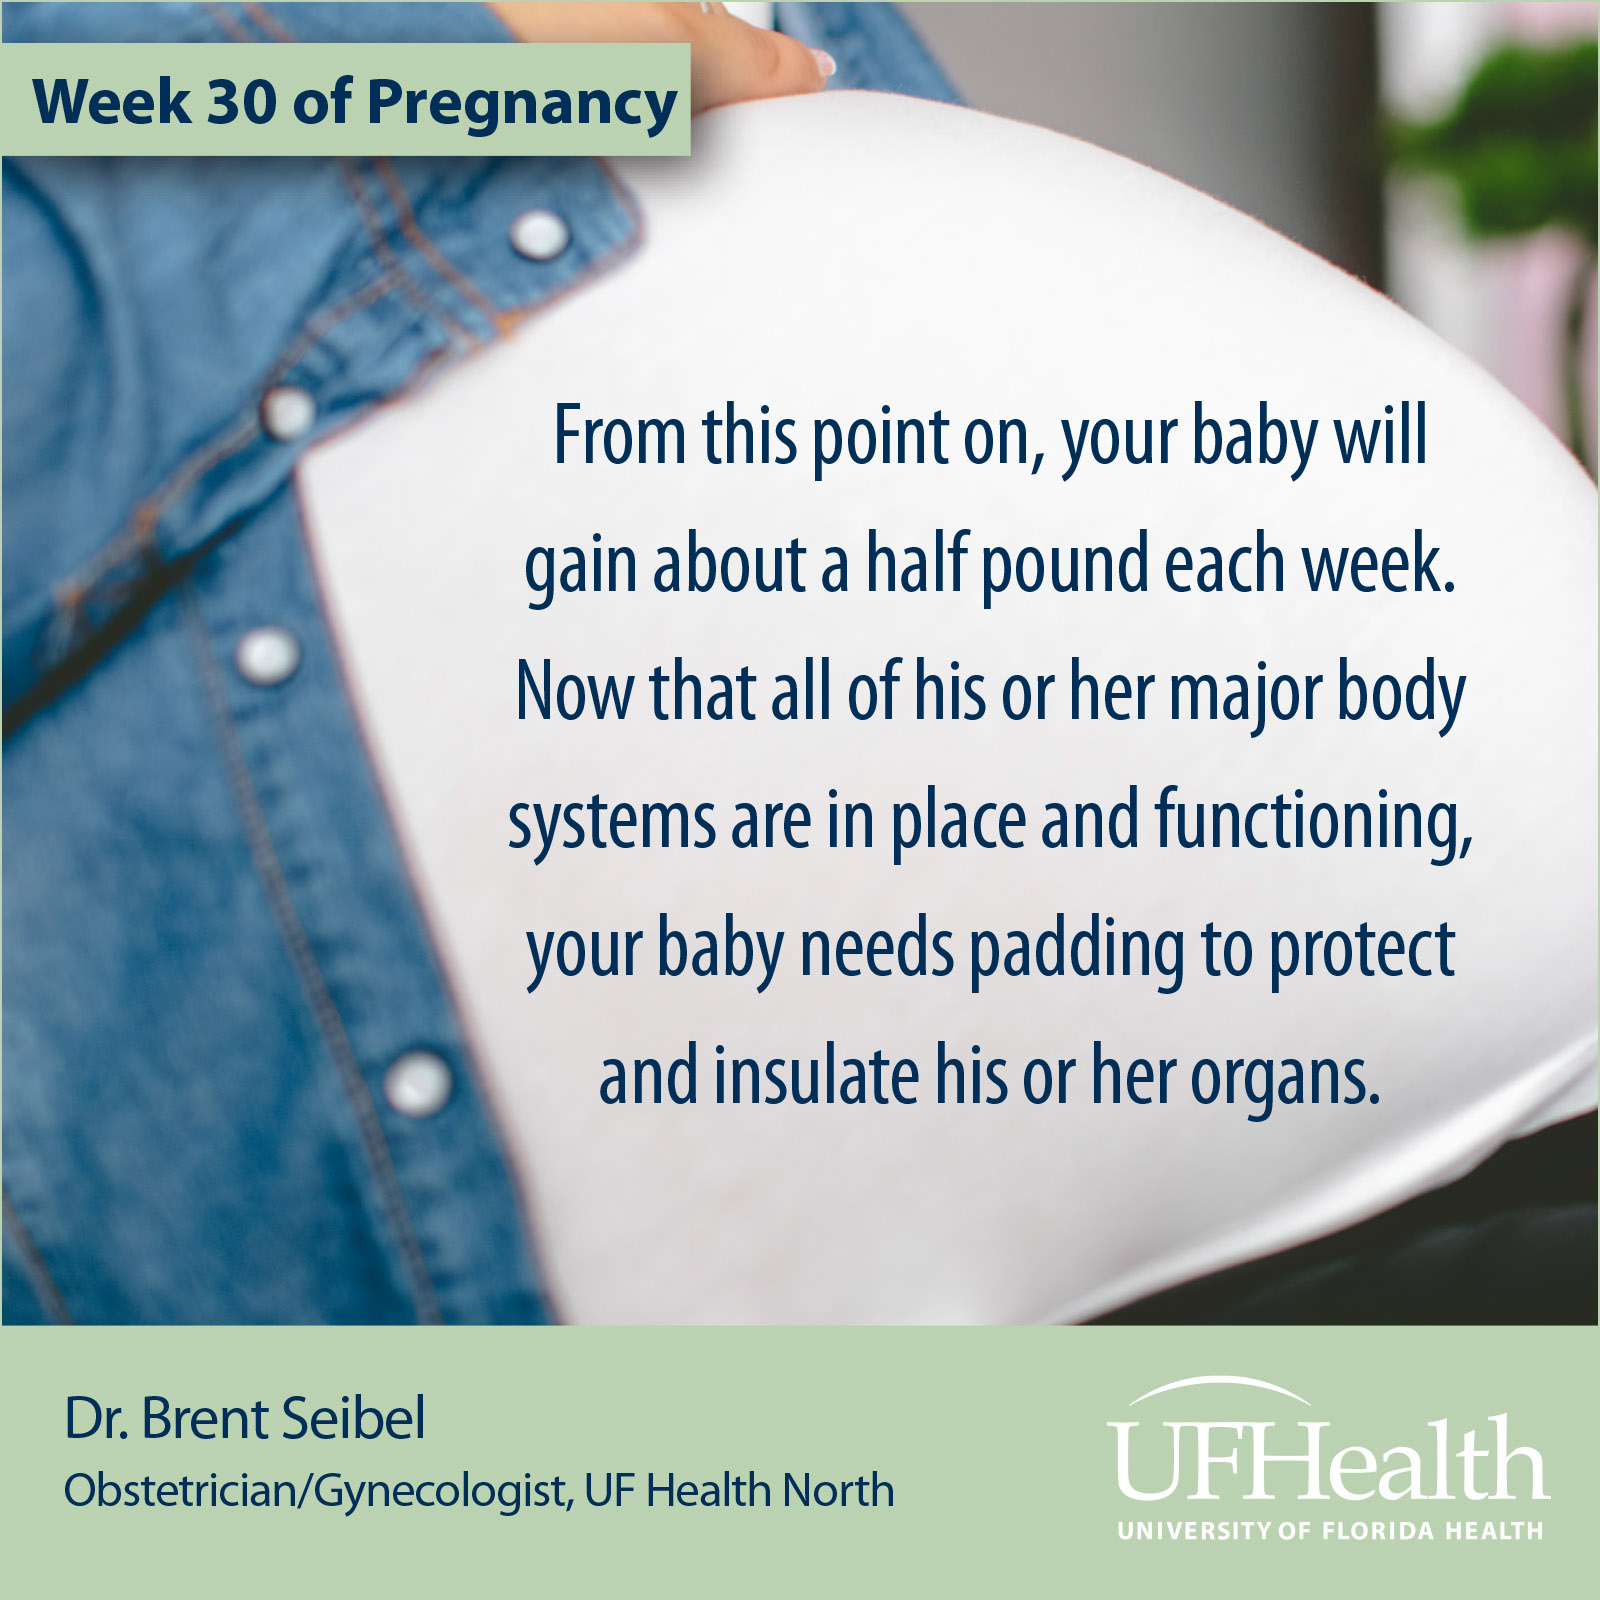 UF Health North pregnancy tip 30